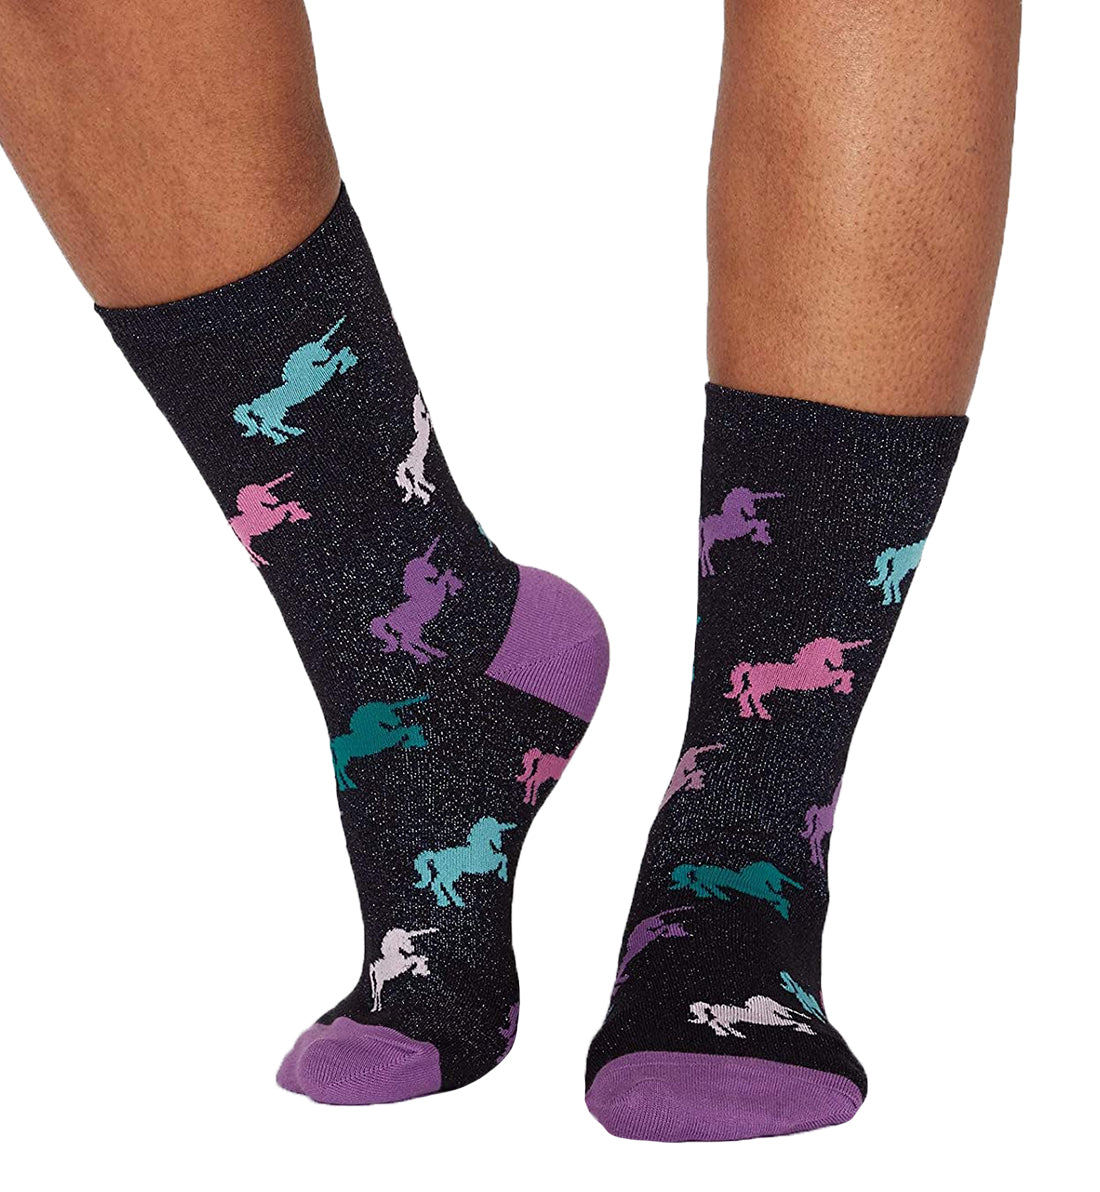 SOCK it to me Women's Crew Socks (w0229),Keep Prancing - Keep Prancing,One Size